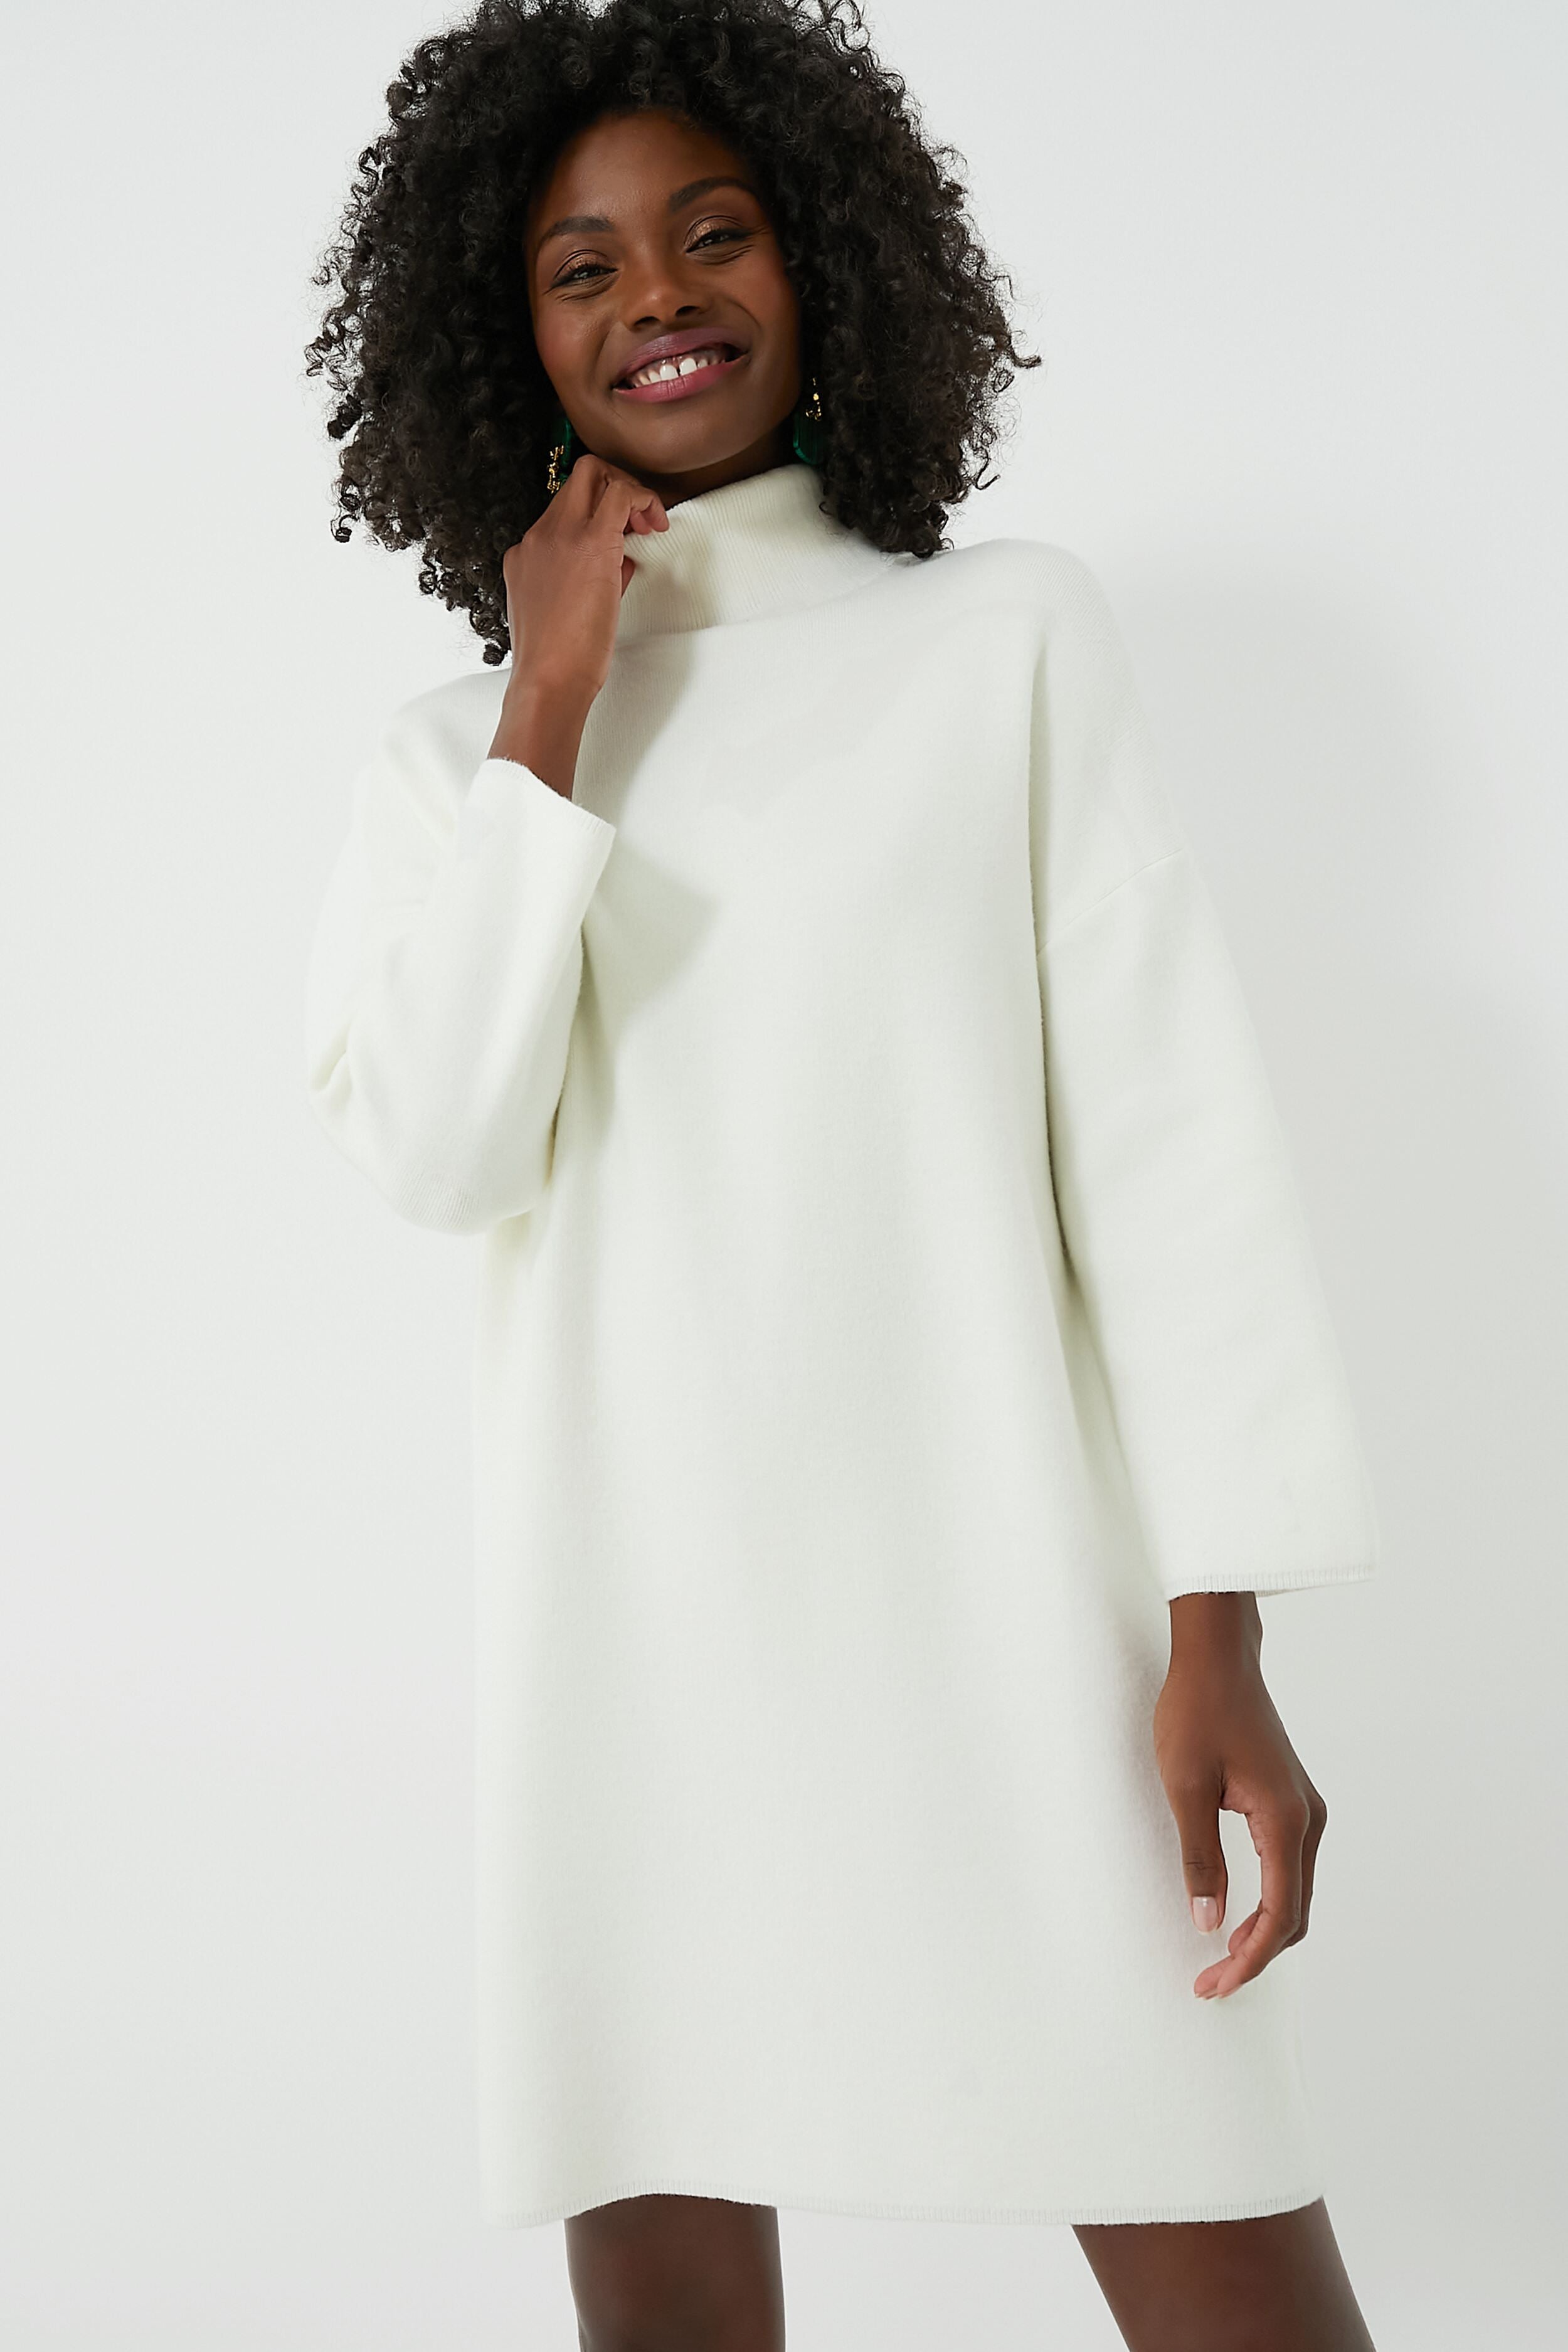 white winter dress